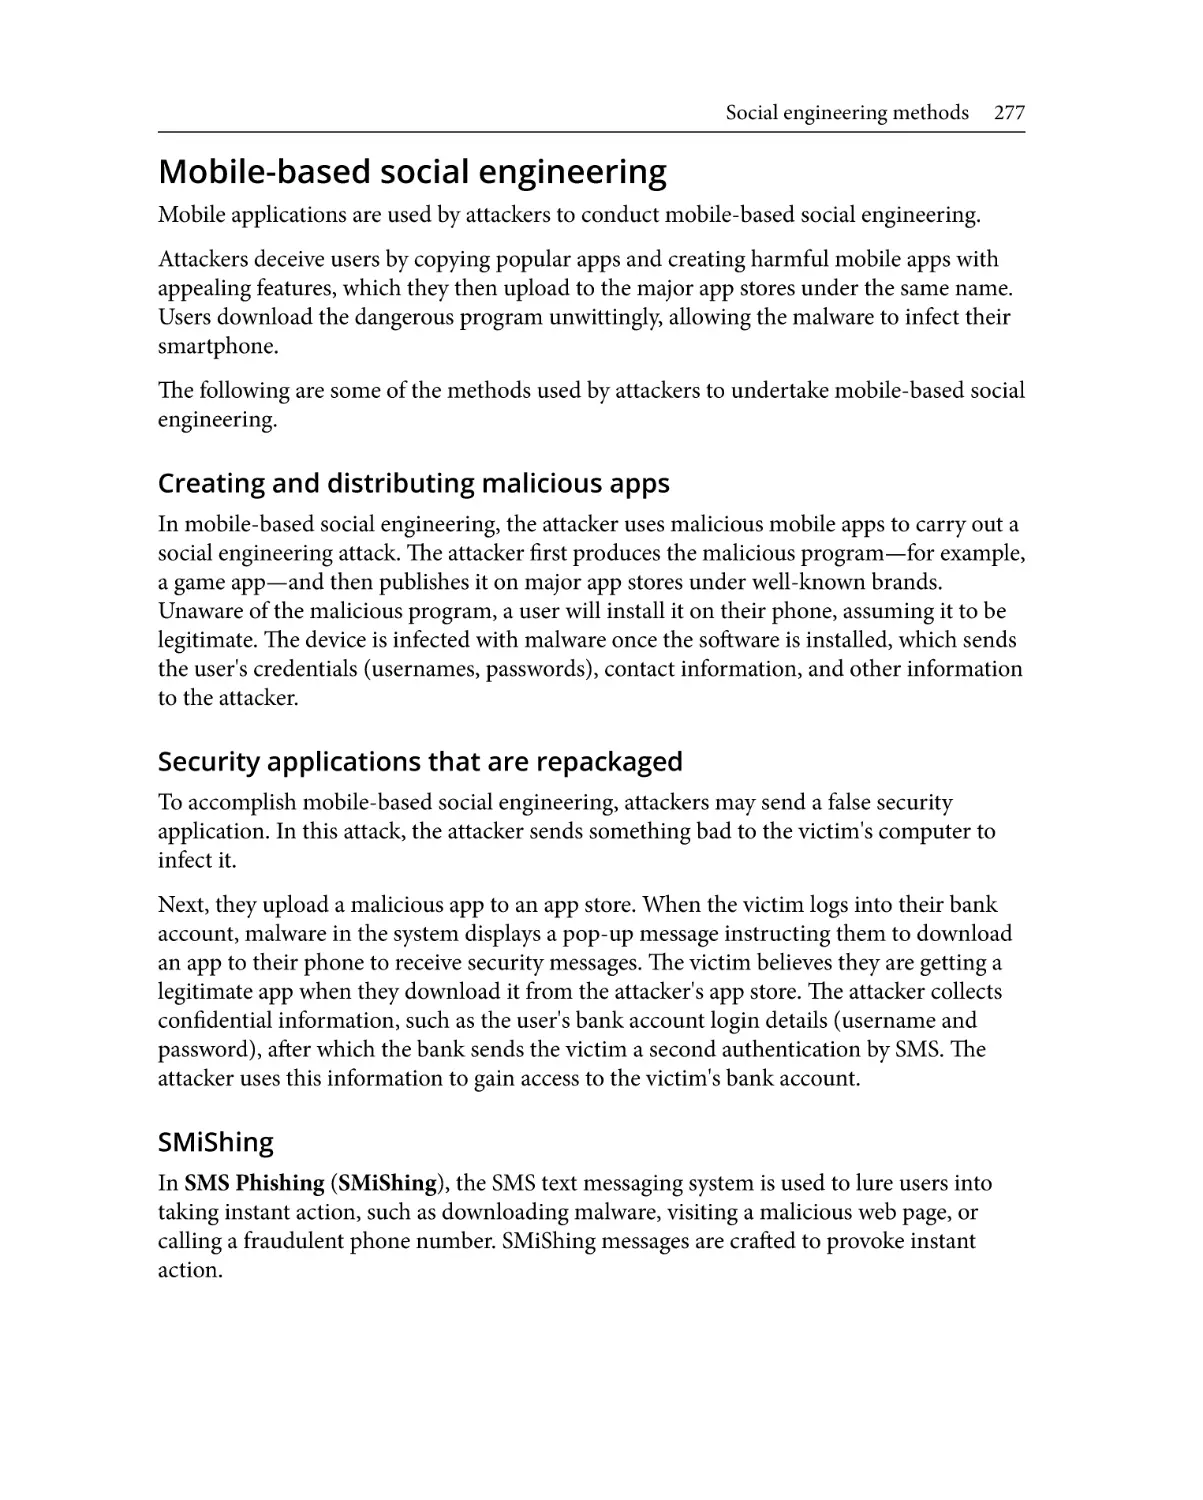 Mobile-based social engineering